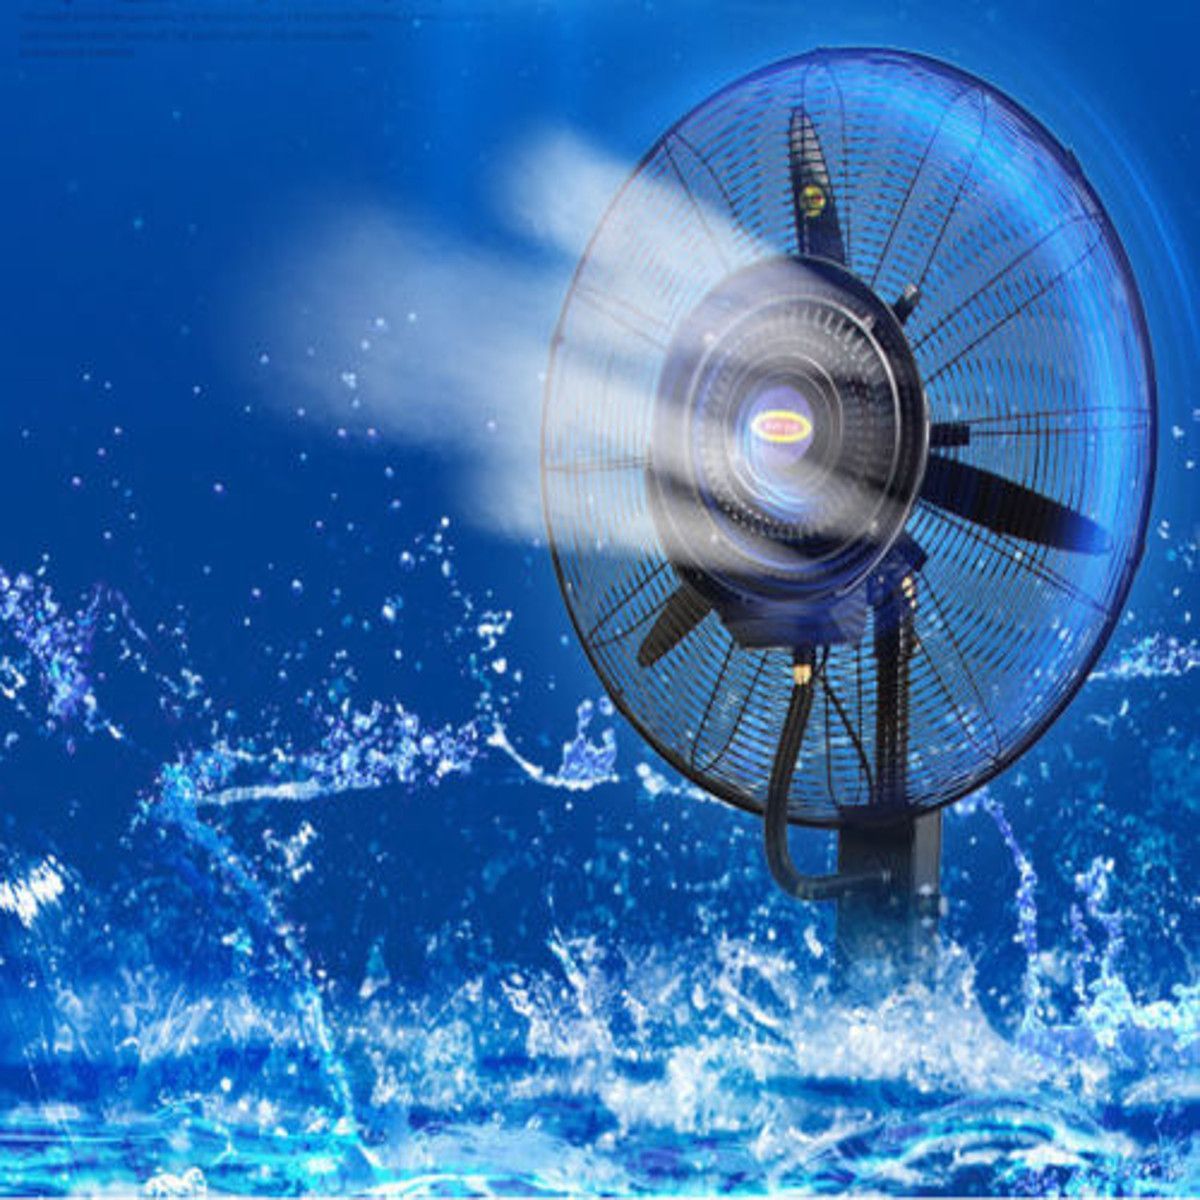 Outdoor-Water-Mist-Fan-Industrial-Spray-Electric-Fan-Large-Wind-Air-Cooling-Floor-Fans-Humidificatio-1567402